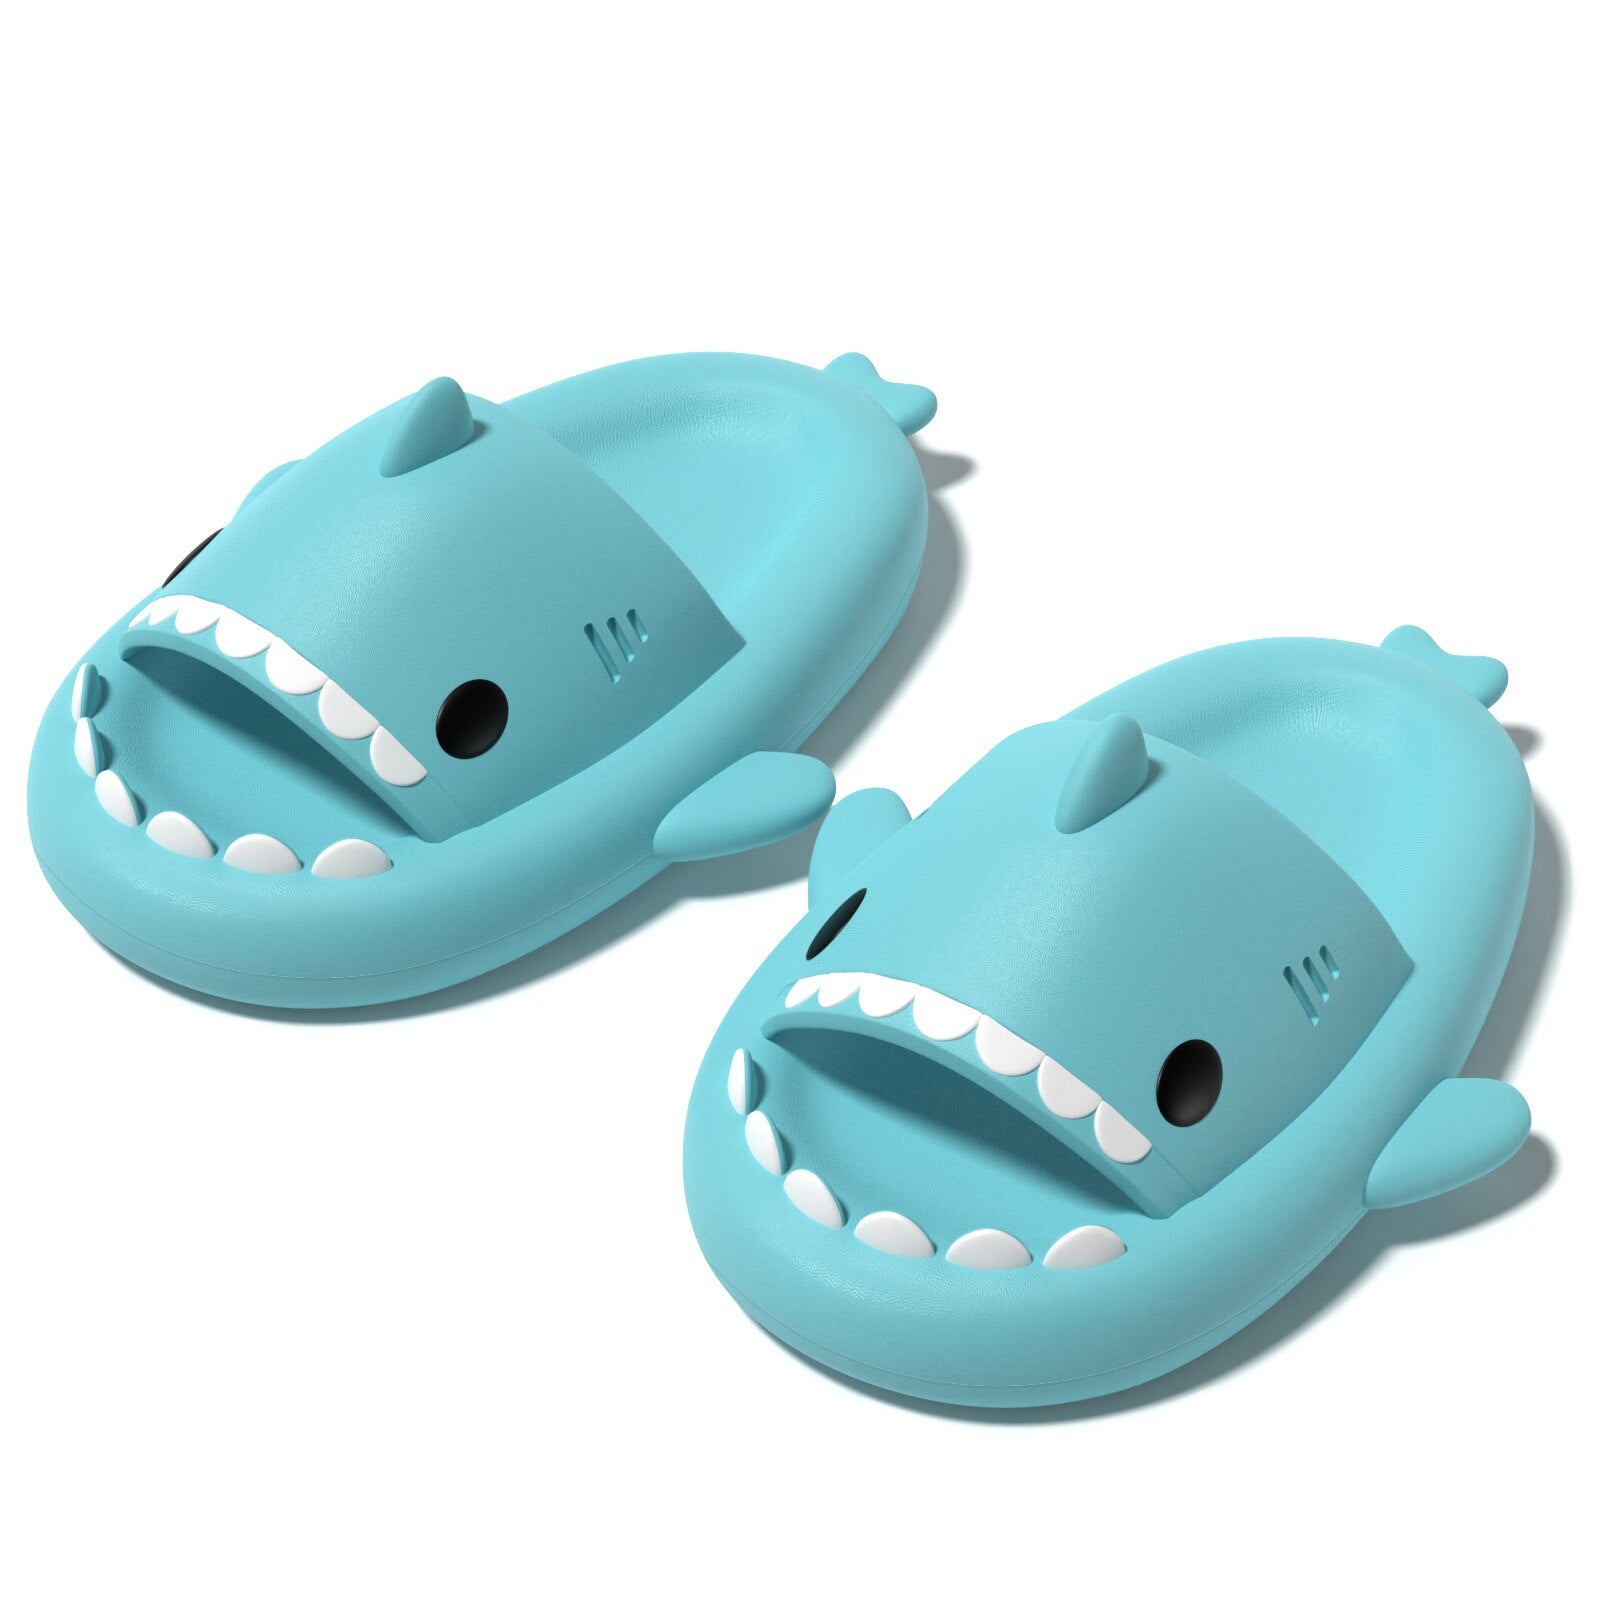 Shark platform slippers for comfort.